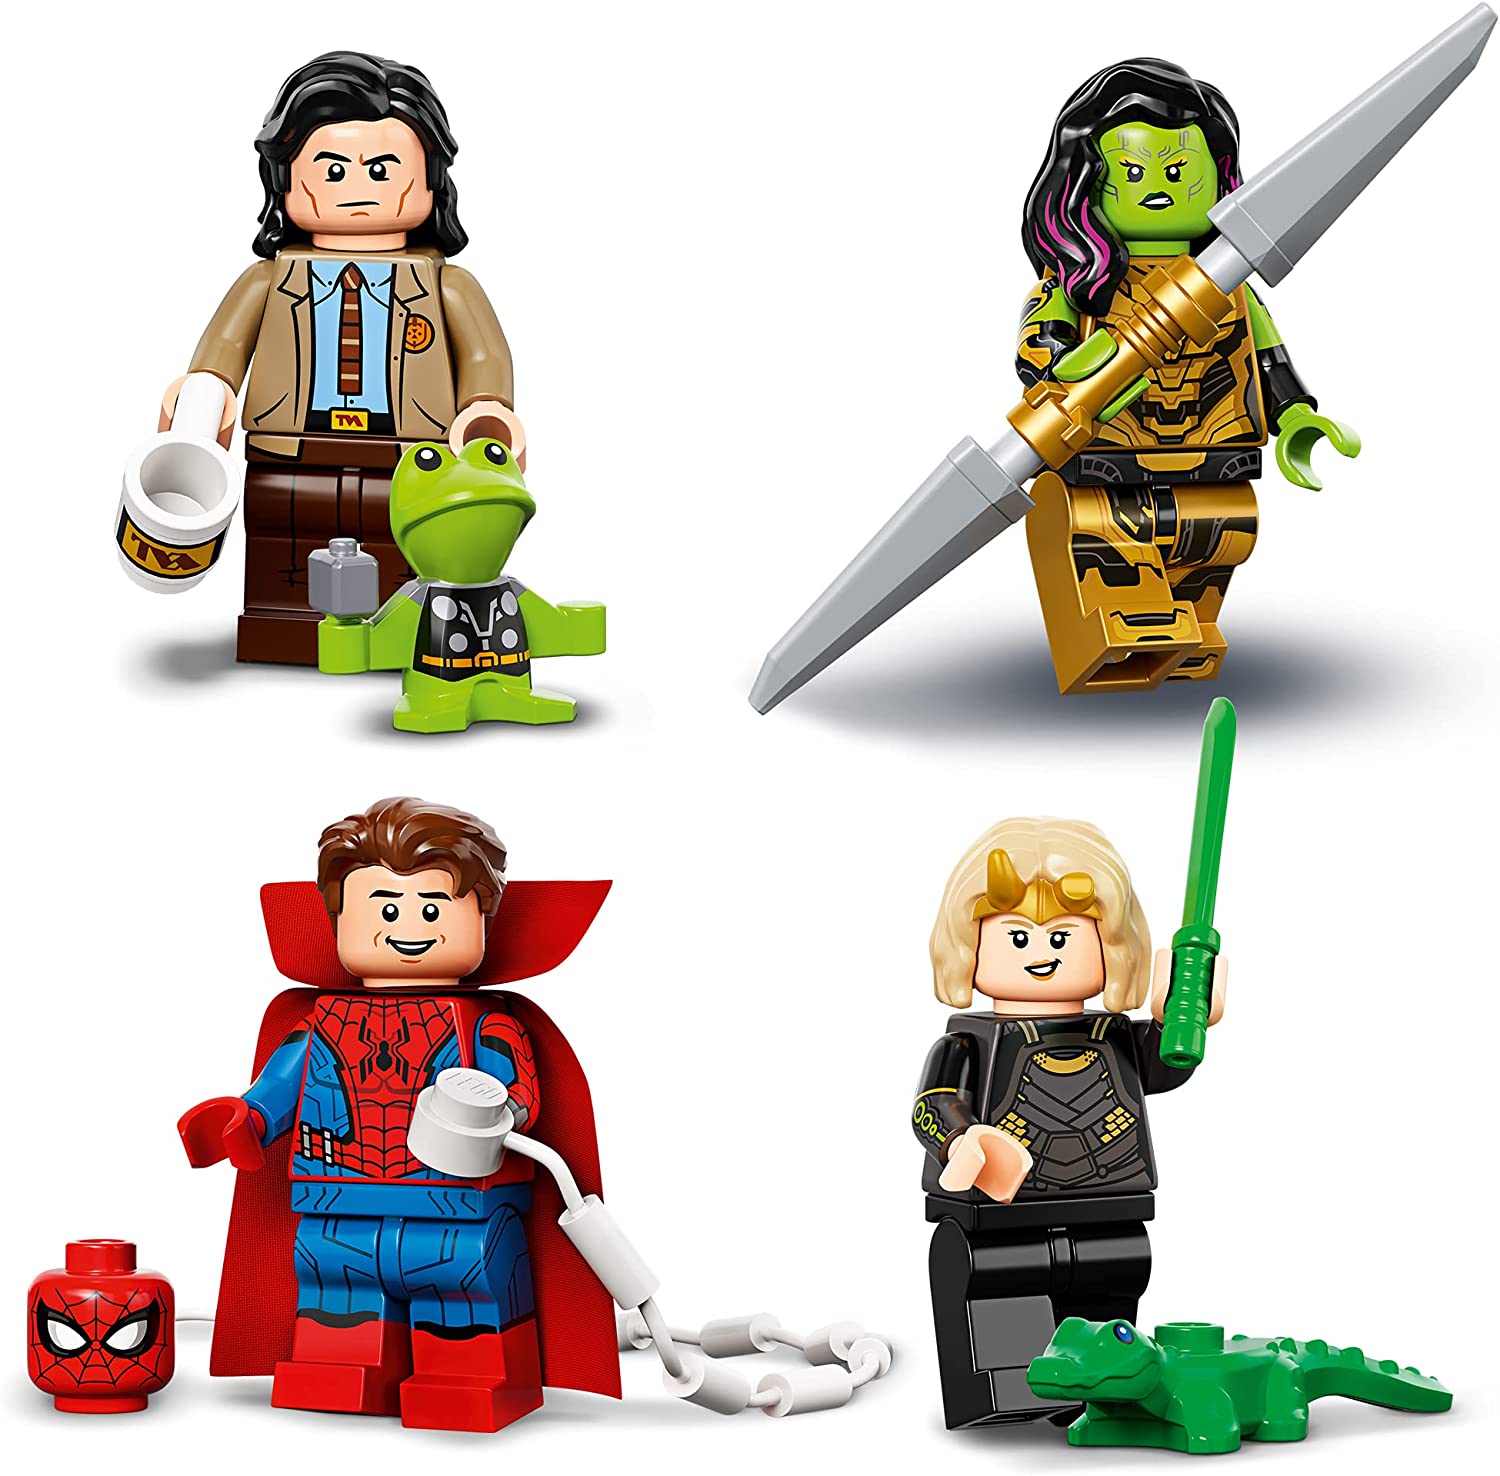 LEGO Minifigures Marvel Studios